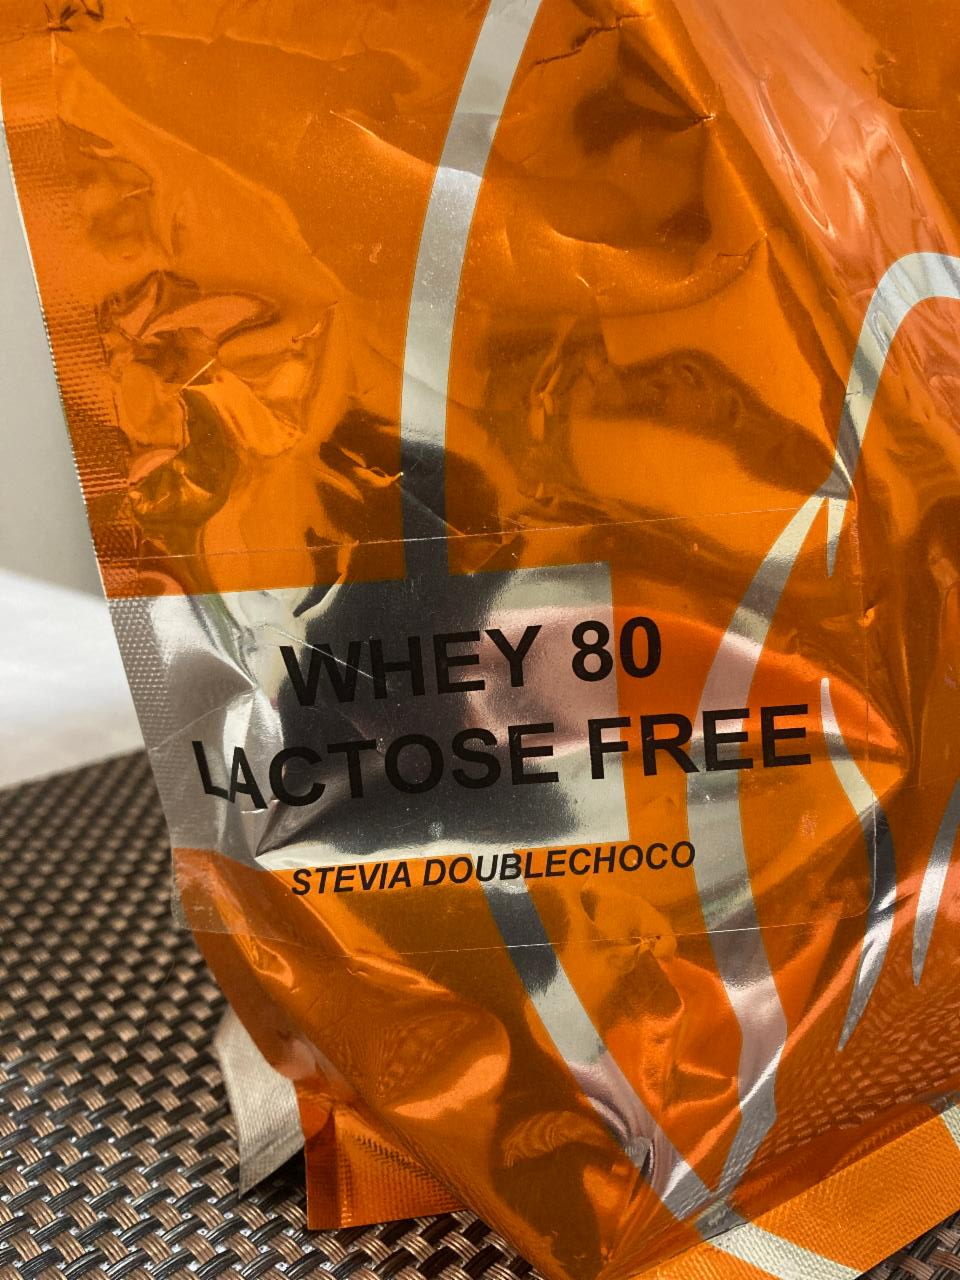 Fotografie - Whey 80 lactose free Stevia Doublechoco Still Mass